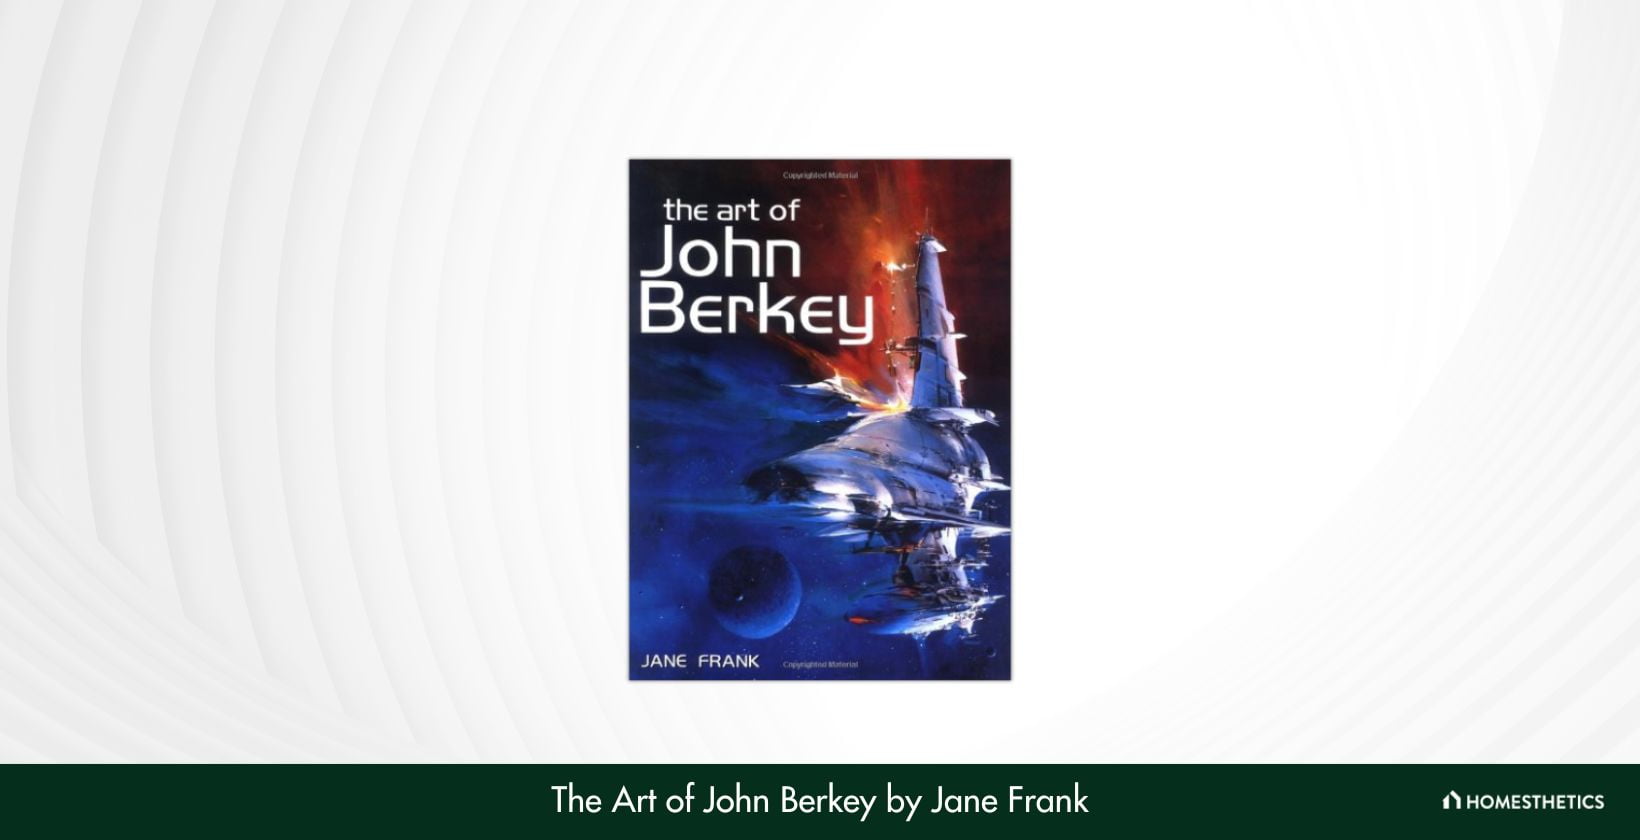 The Art of John Berkey by Jane Frank